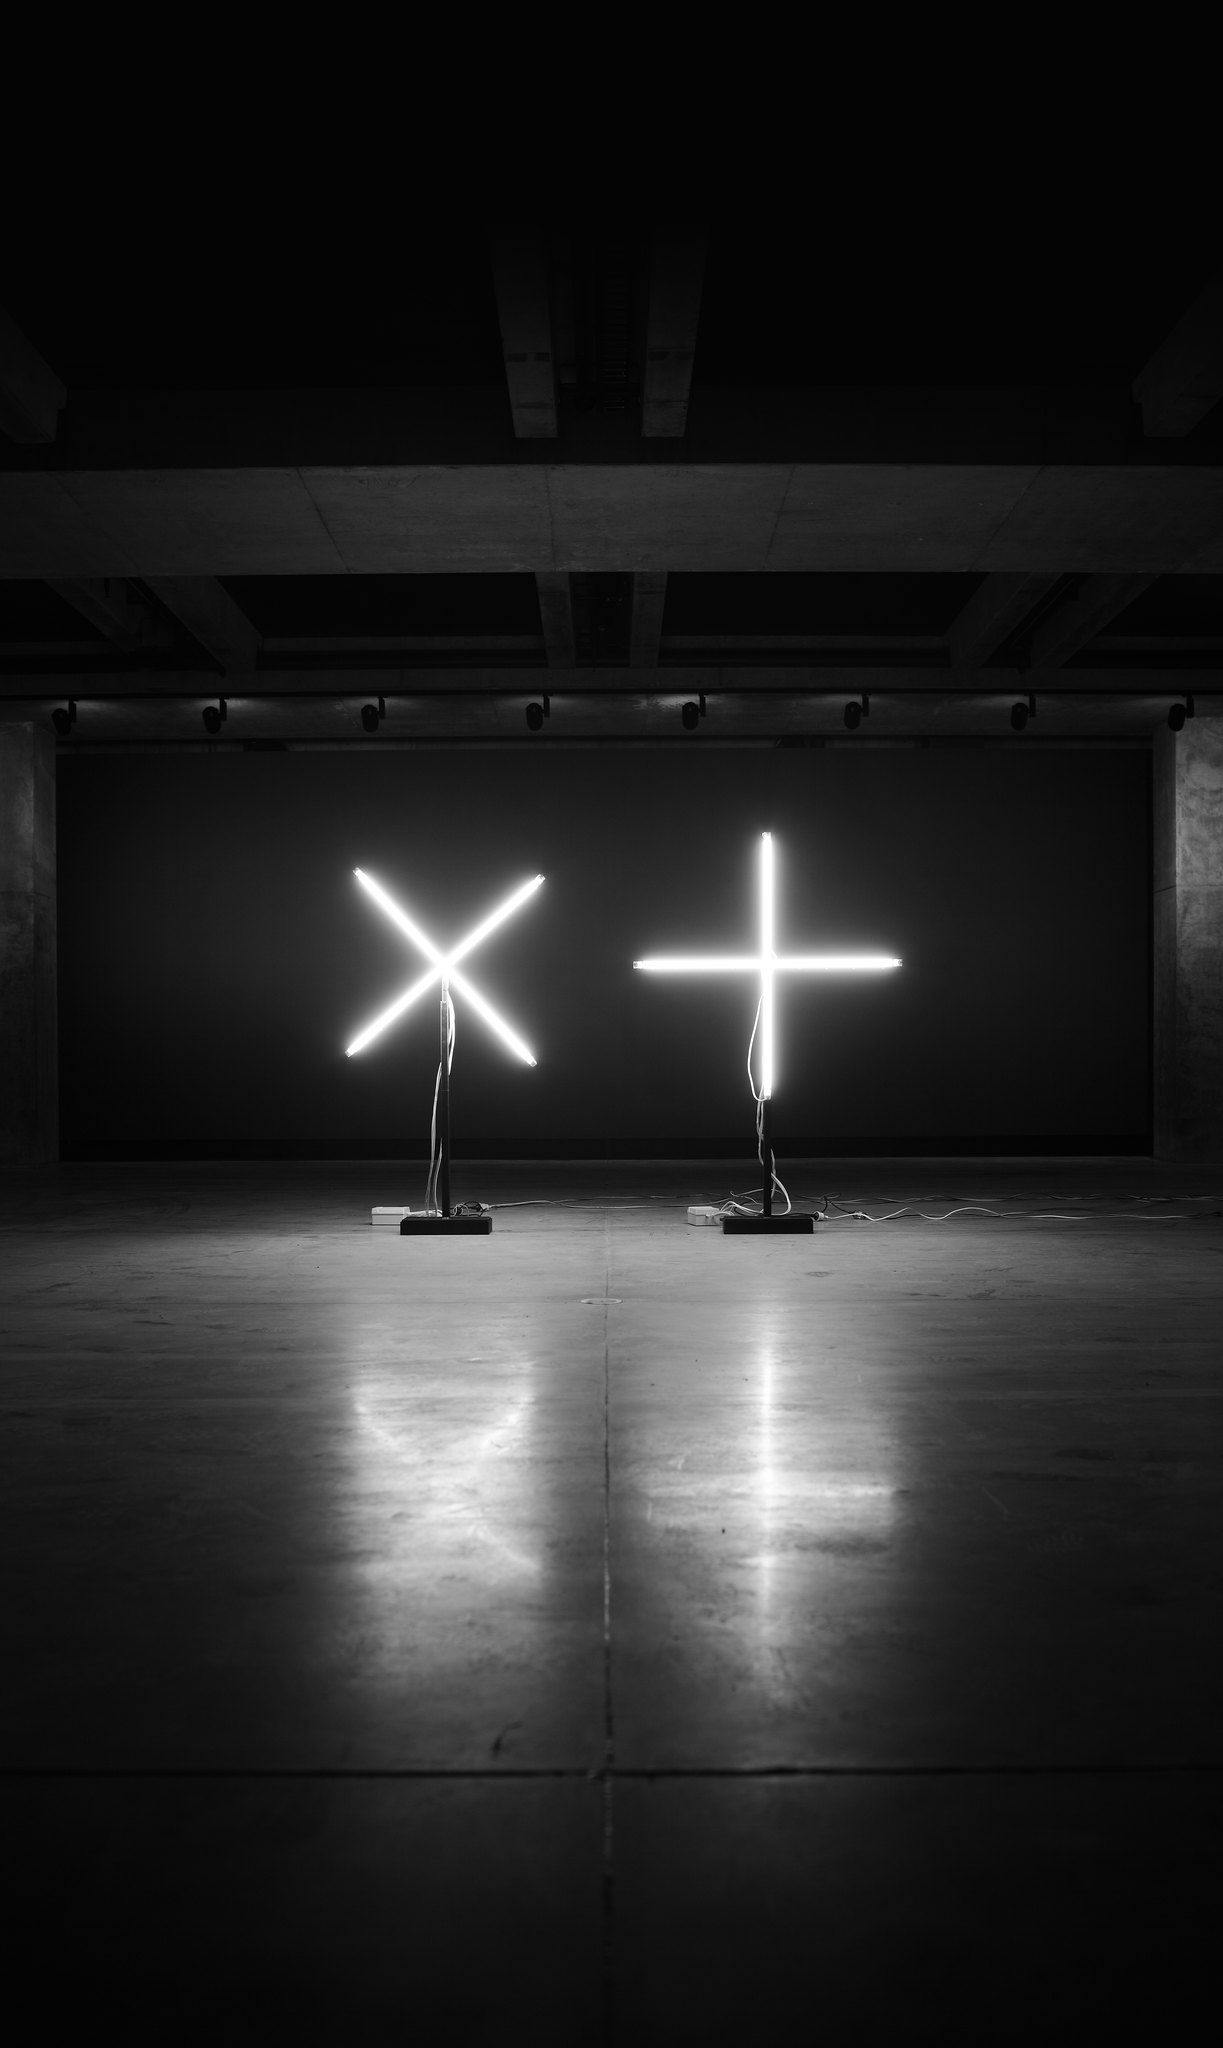 Illuminated cross and plus symbol in a darkened room